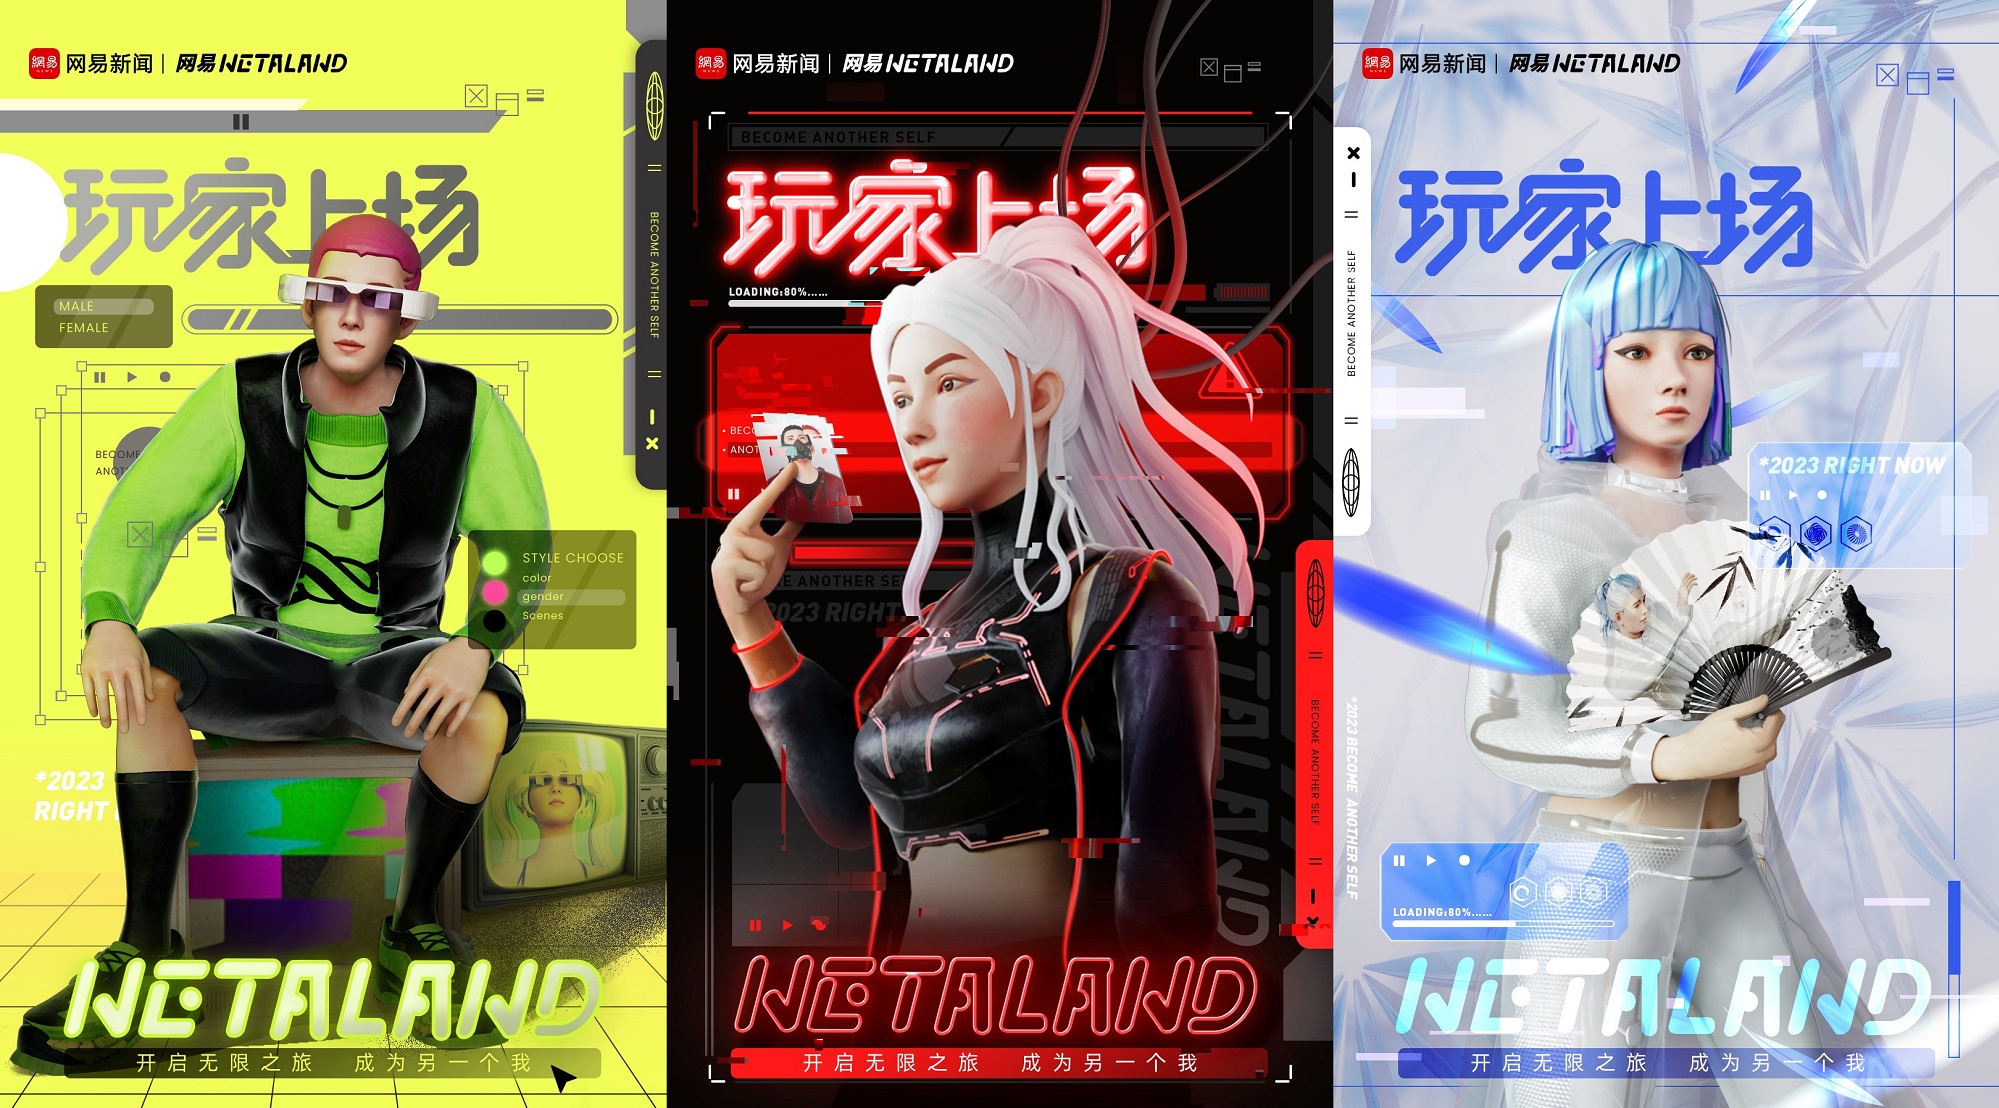 NetEase debuts NETALAND, revolutionising brand marketing in the Metaverse